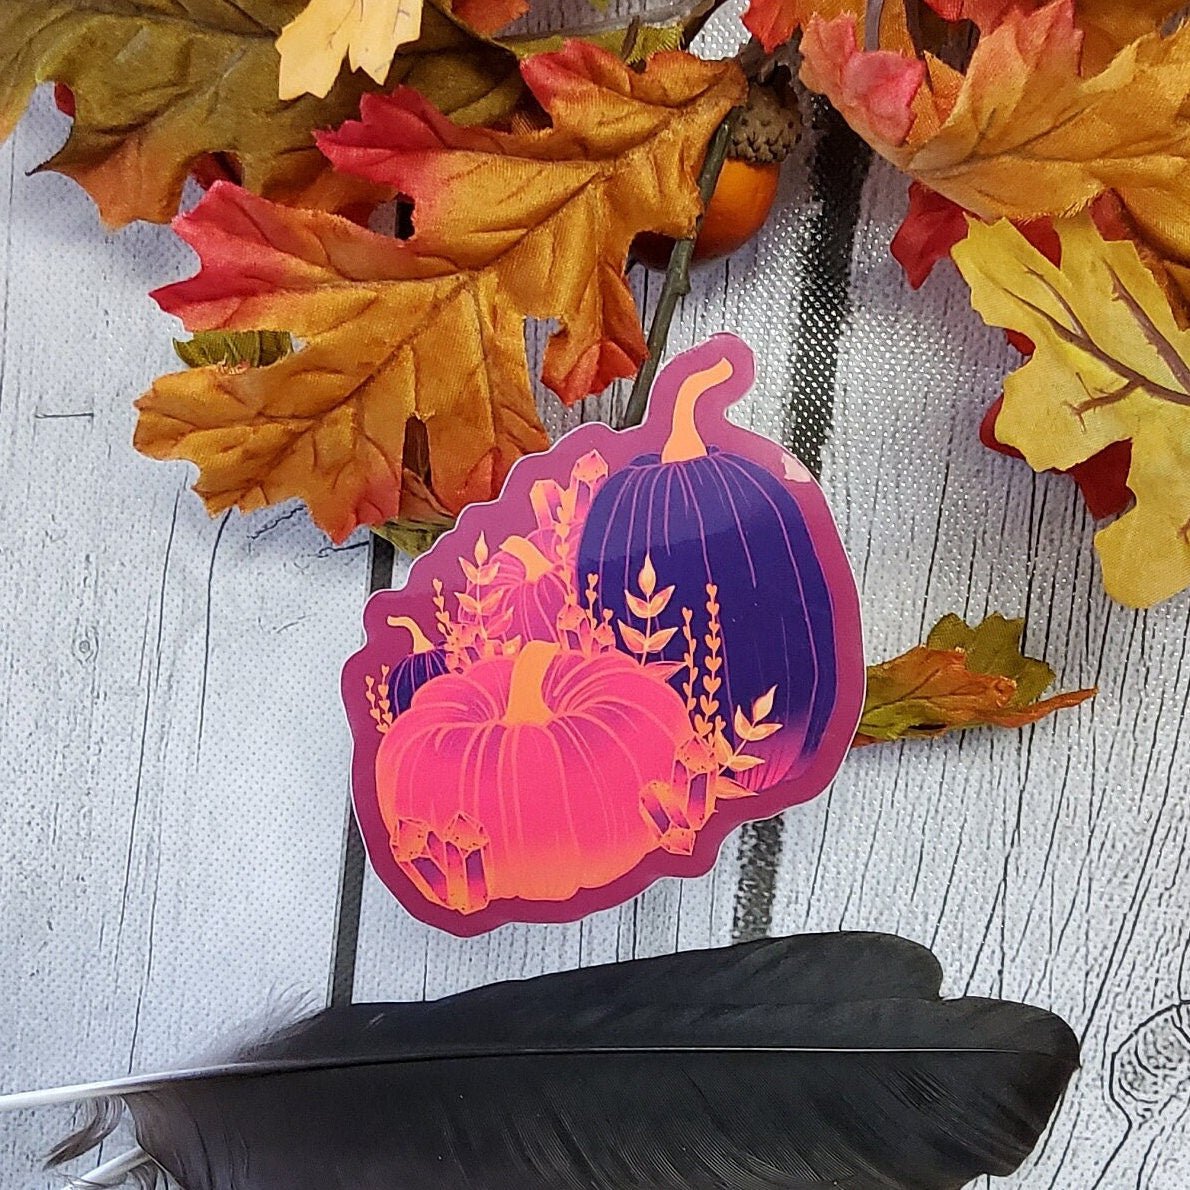 GLOSSY STICKER: Psychadelic Pumpkins and Crystals Sticker , Orange and Purple Pumpkins, Spooky Pumpkin Art